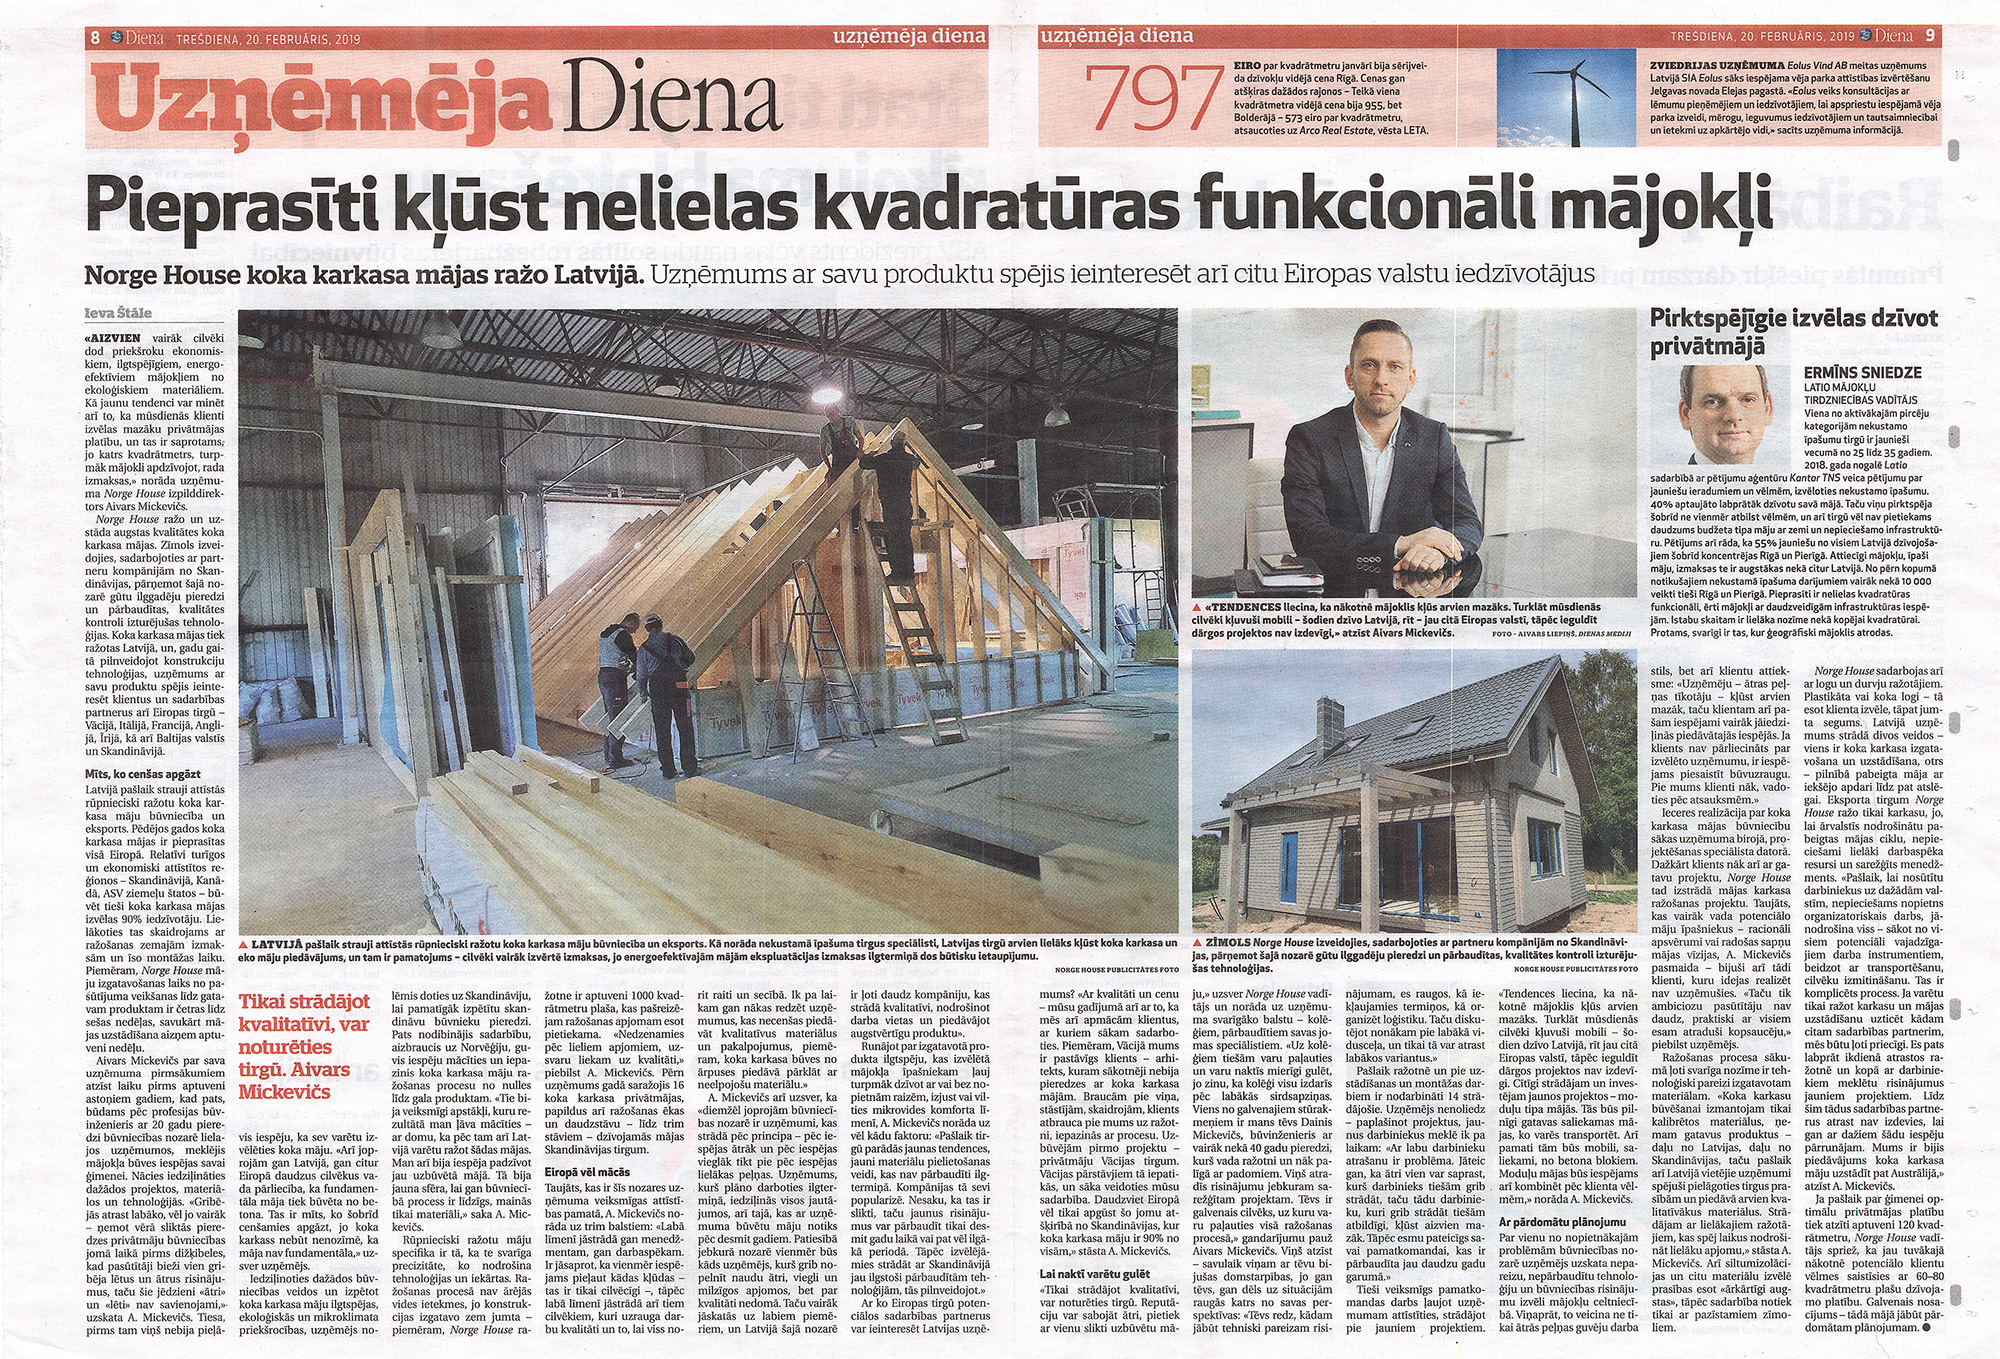 Norge House article in newspaper Diena.